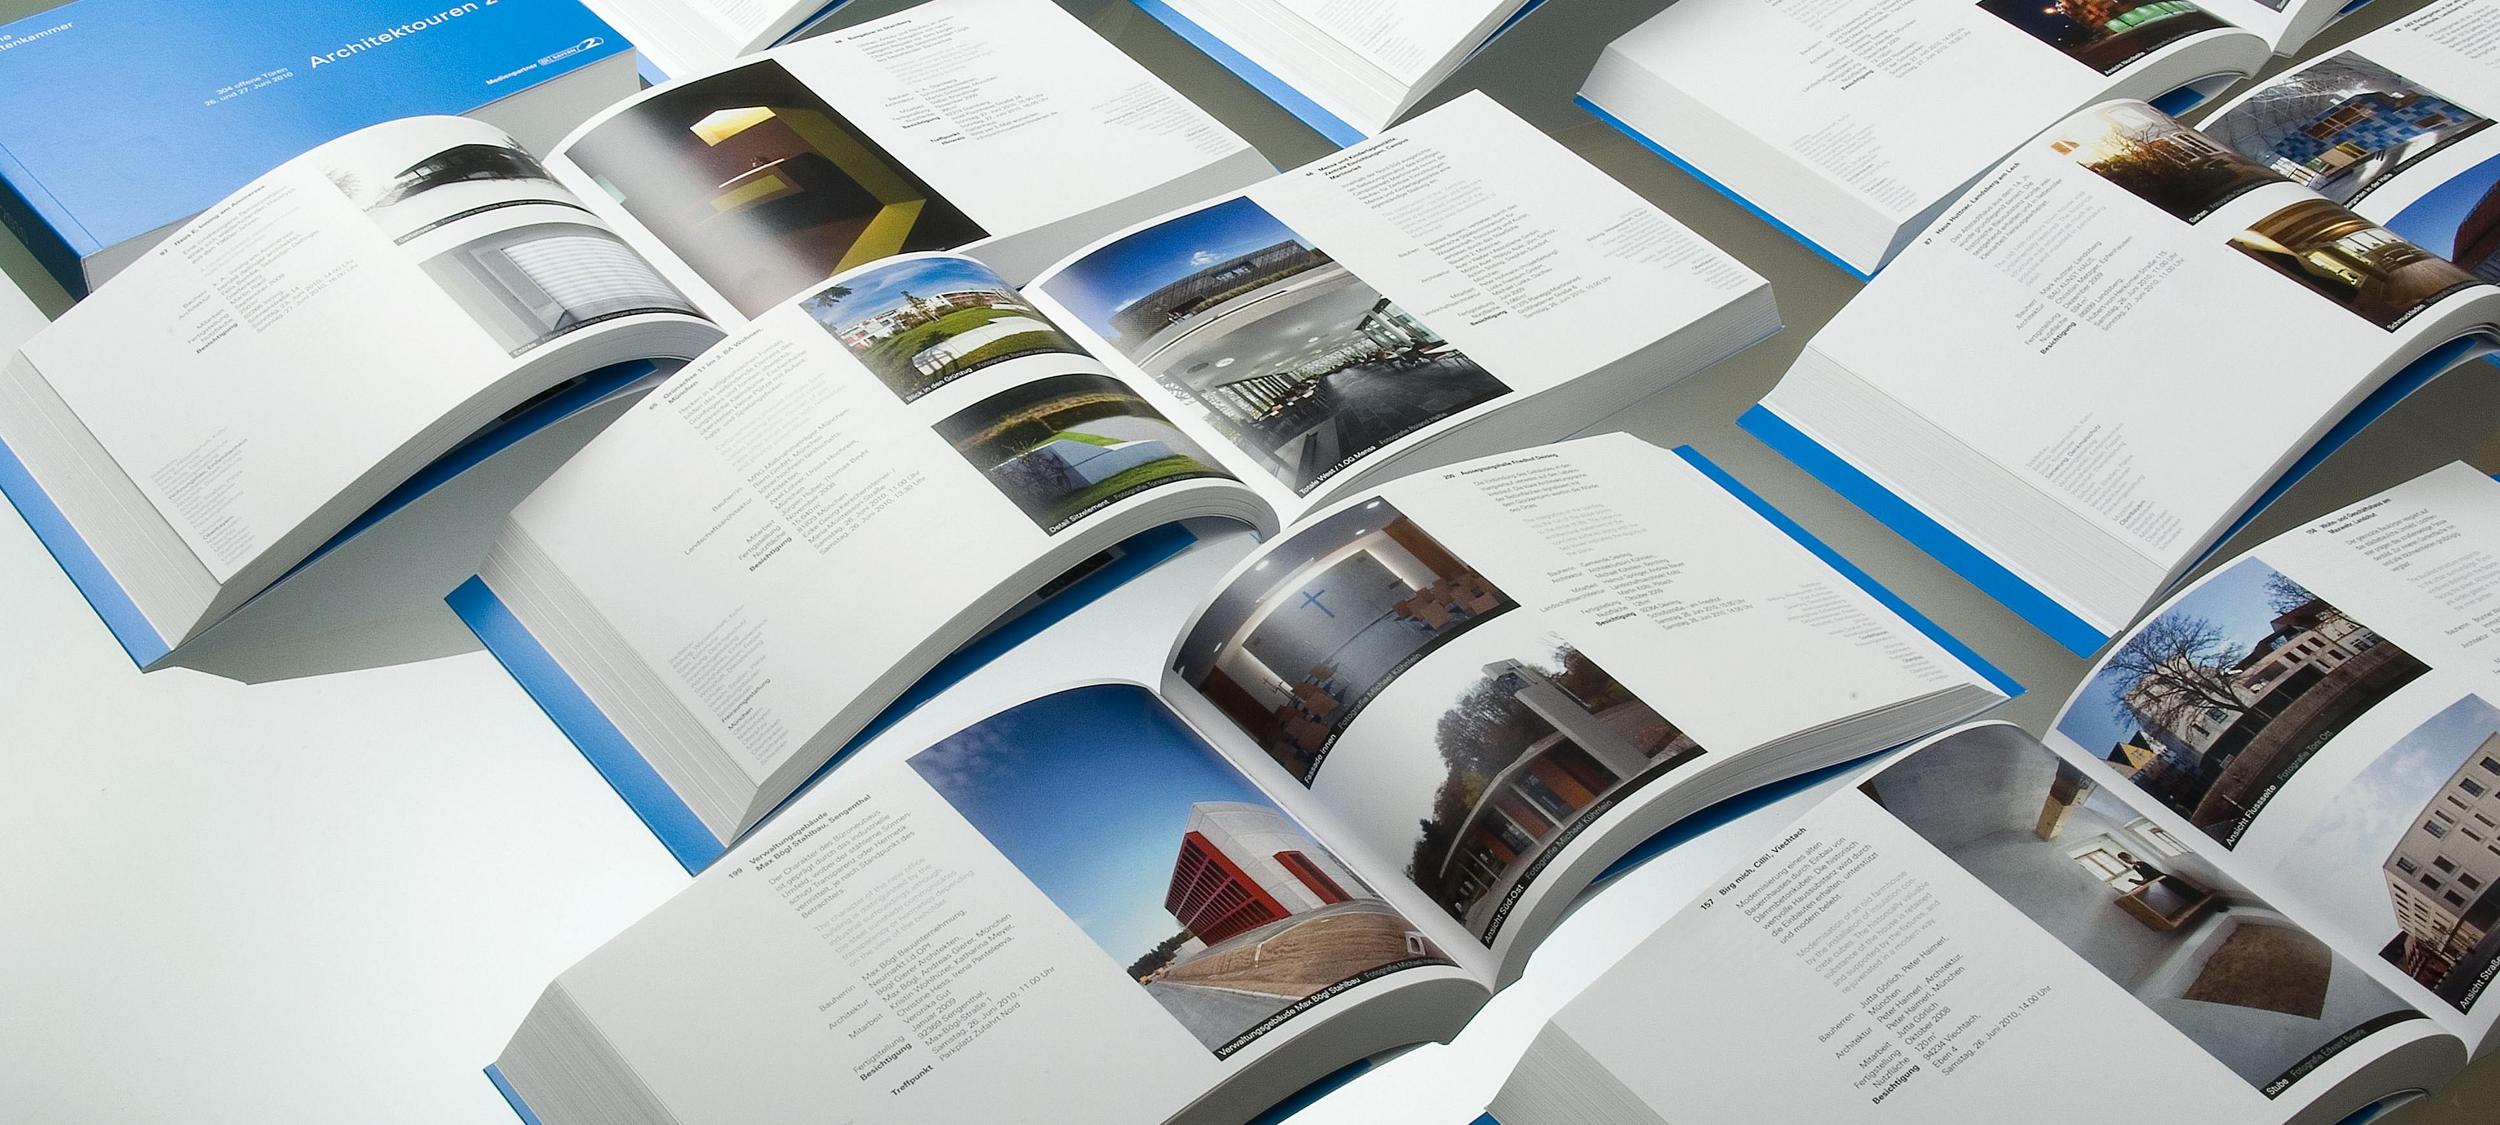 Architektouren Booklets, Foto: Kilian Stauss